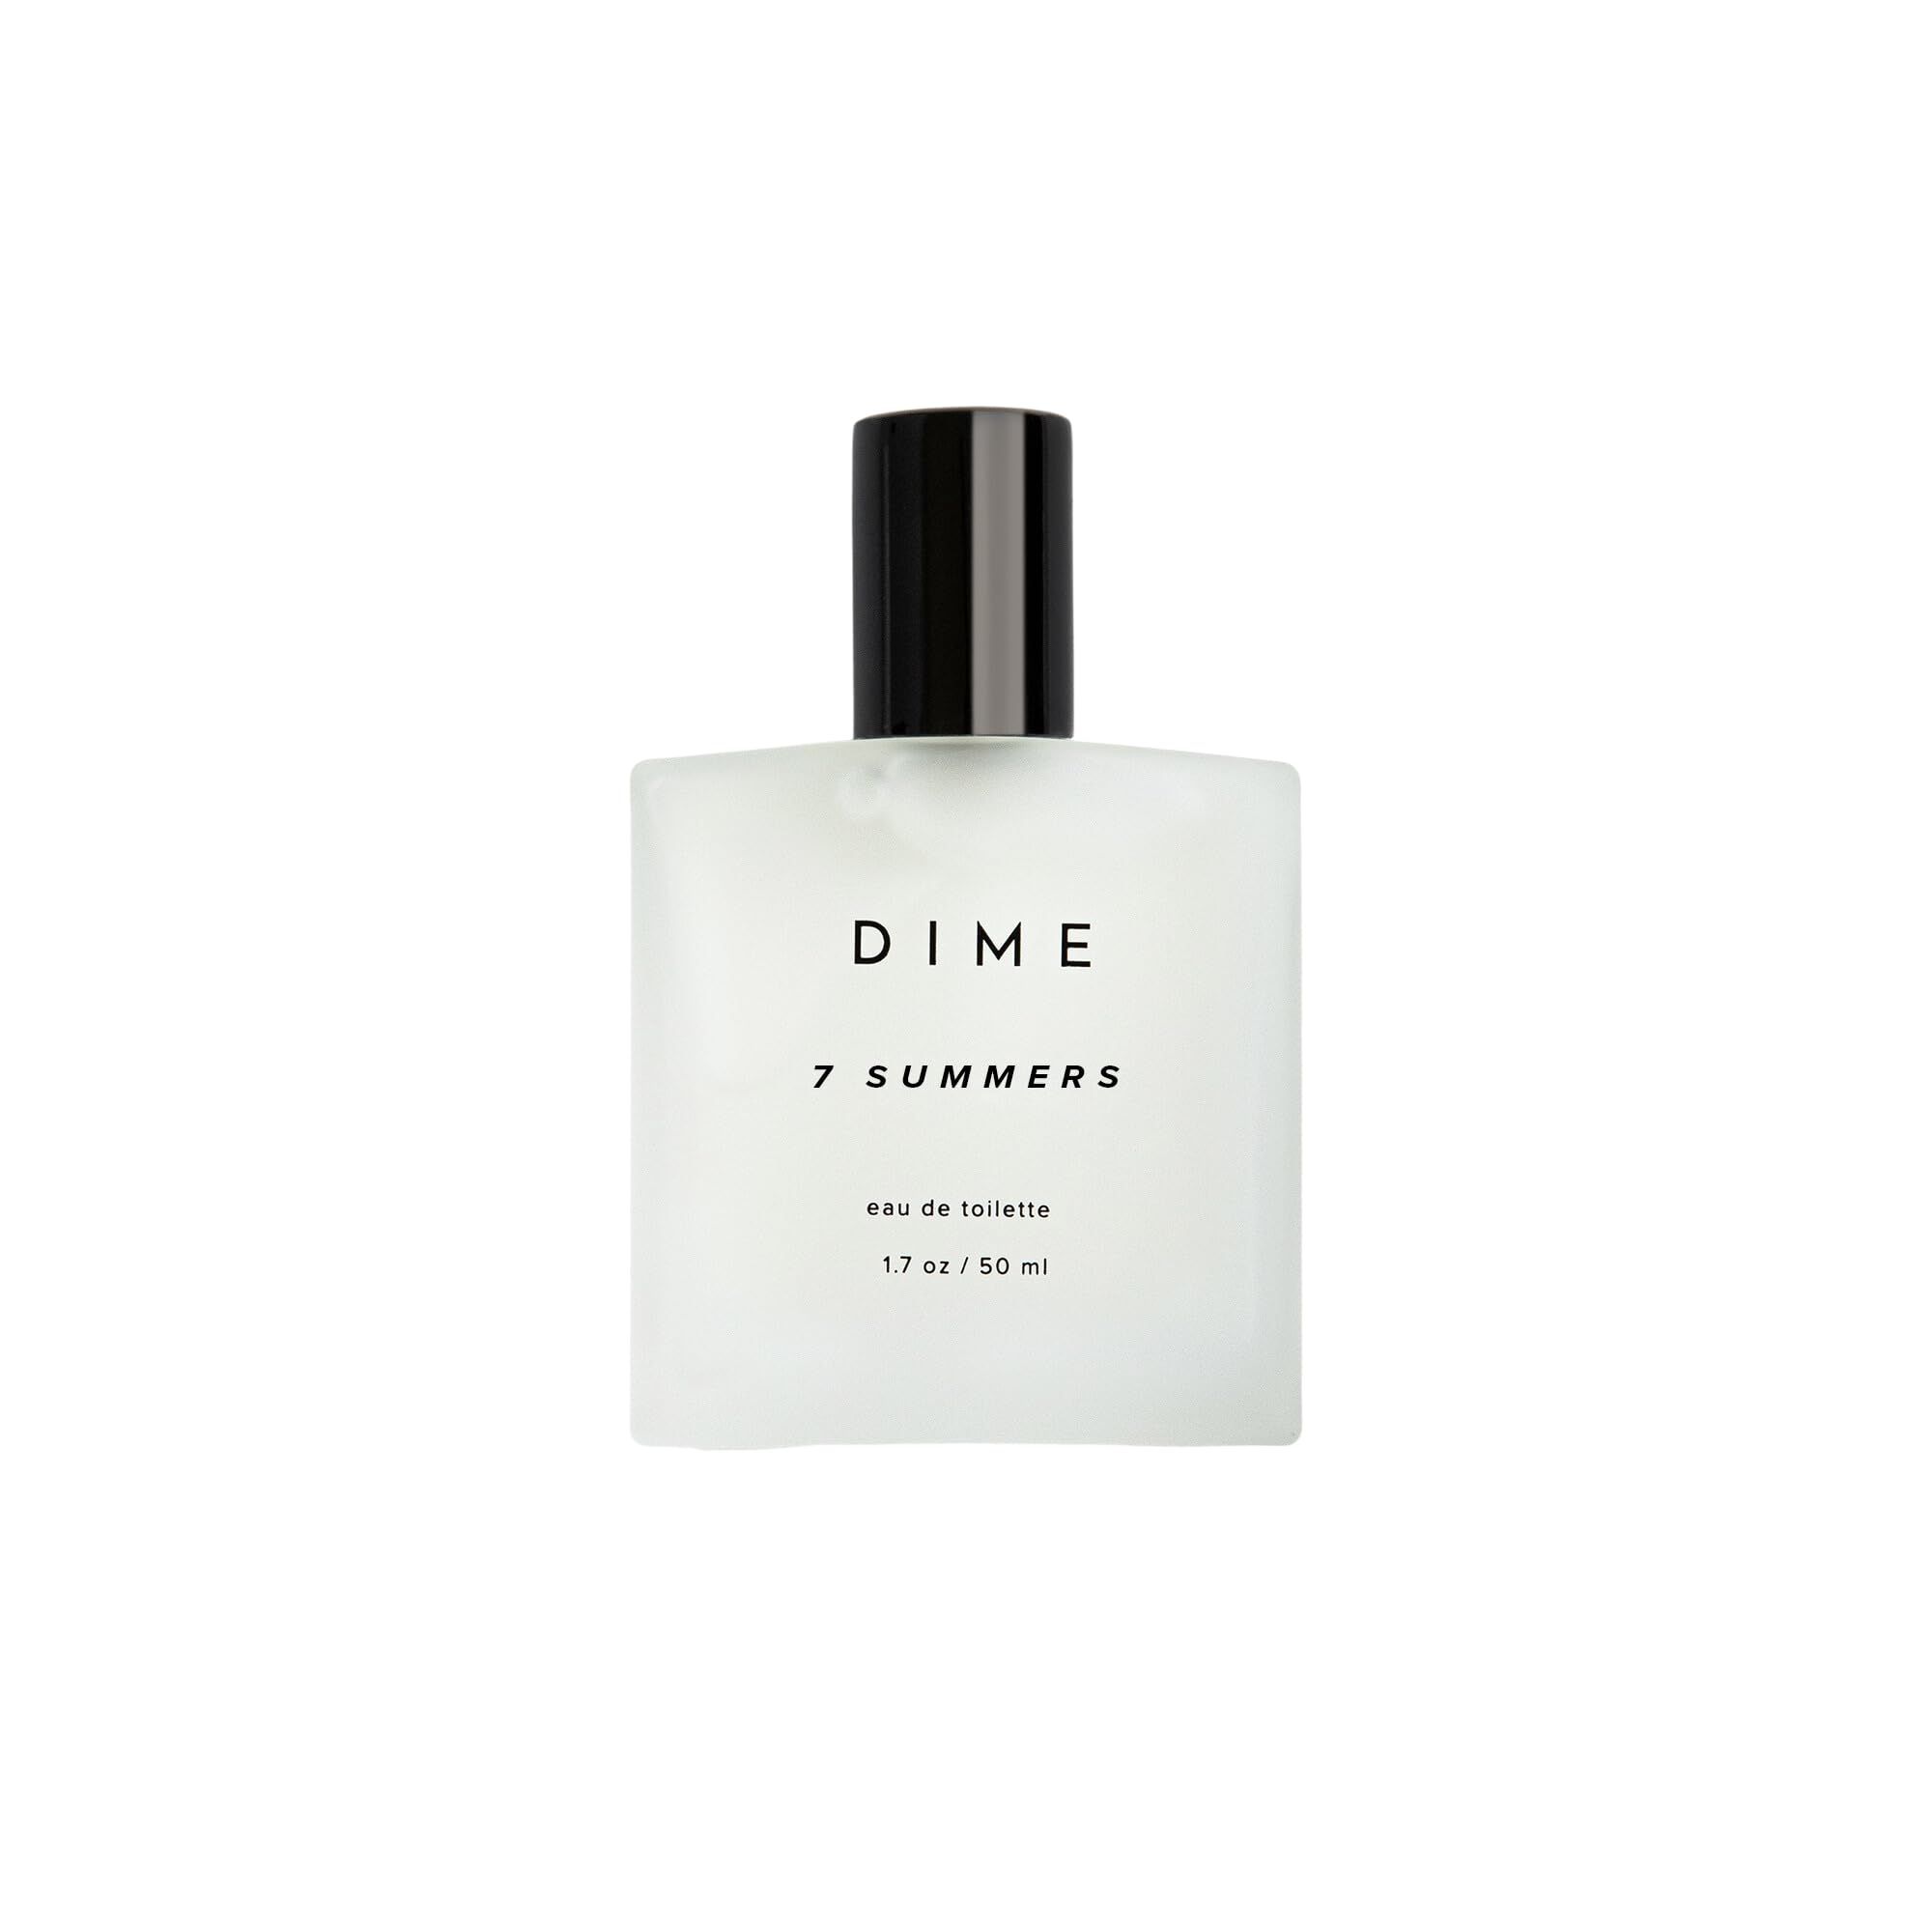 DIME Beauty Perfume 7 Summers, Sweet Floral Scent, Hypoallergenic, Clean Perfume, Eau de Toilette For Women, 1.7 oz / 50 ml | Amazon (US)